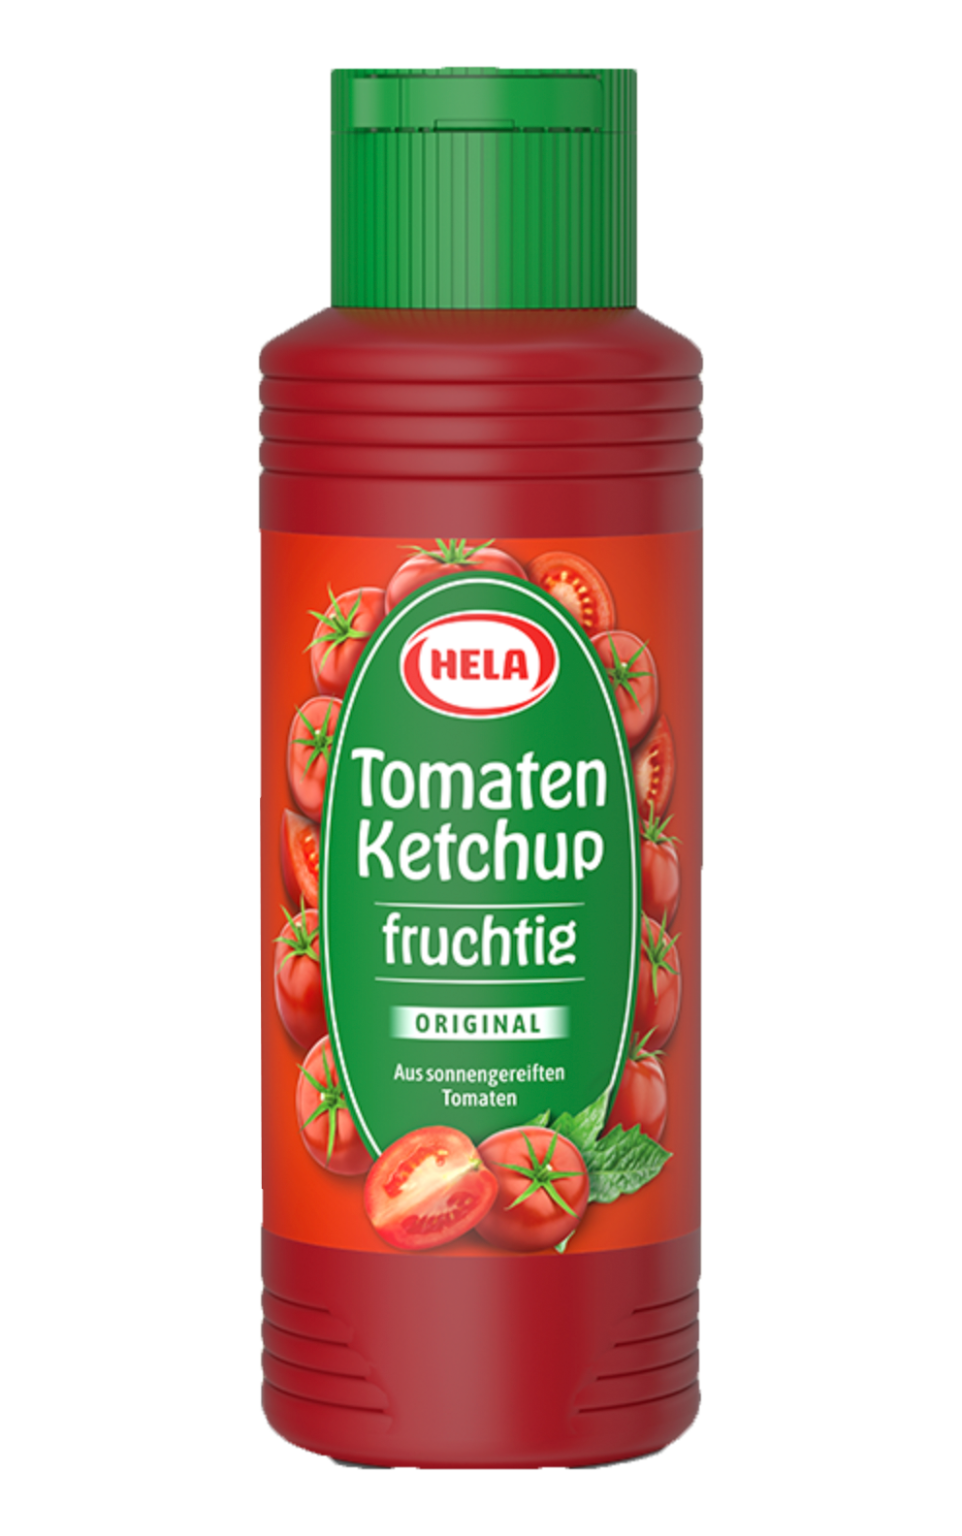 Hela Tomaten Ketchup Classic - socas-ag